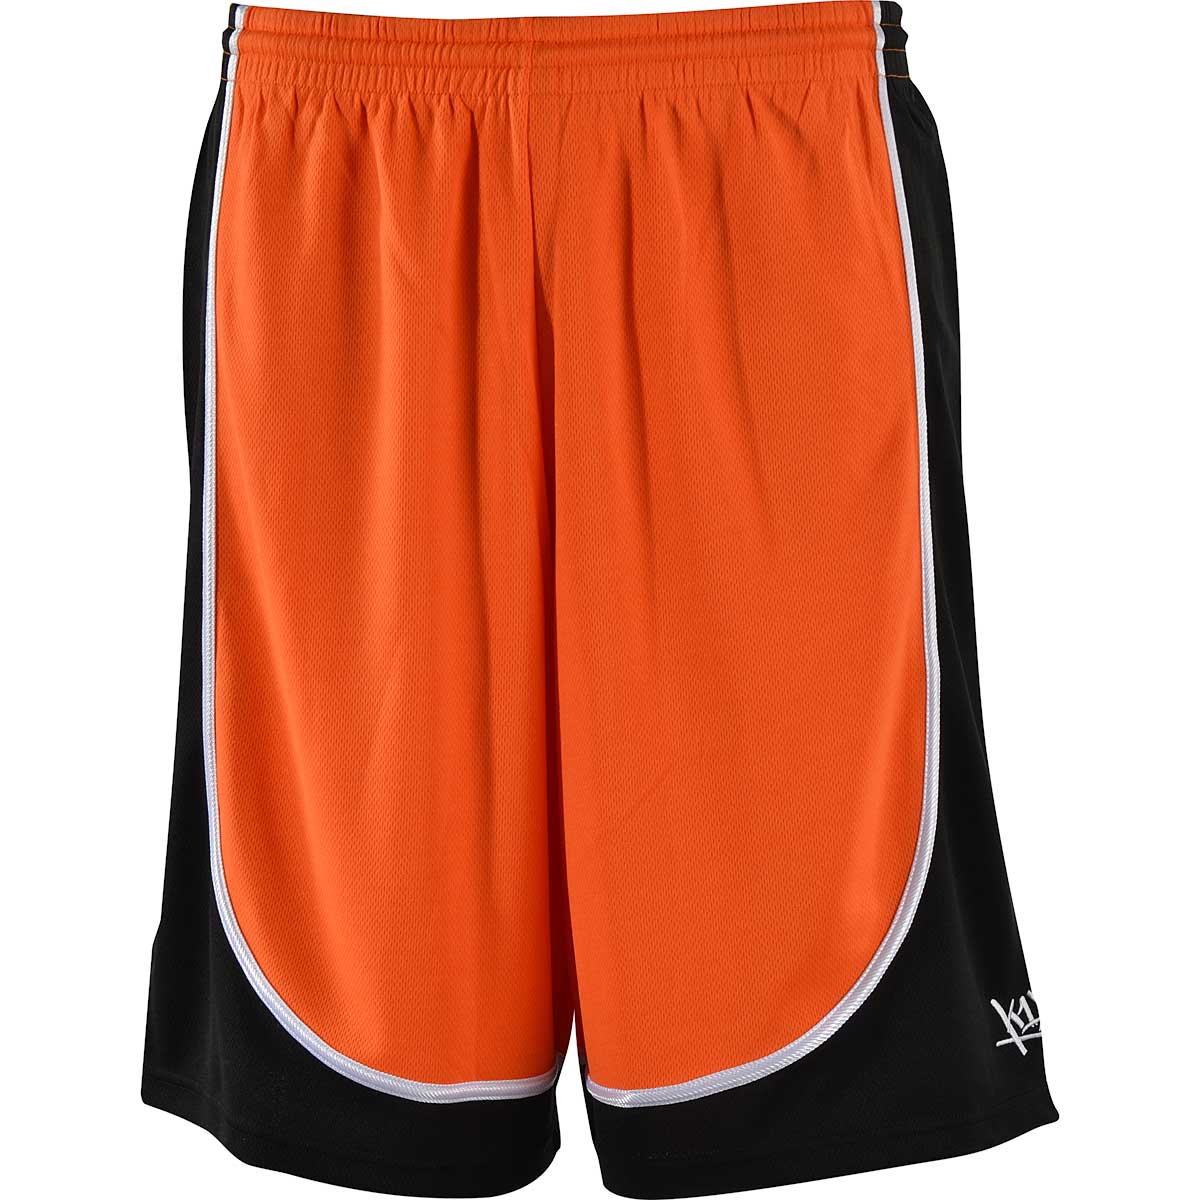 K1X K1X Hardwood League Uniform Shorts Mk2, Orange/Black/White